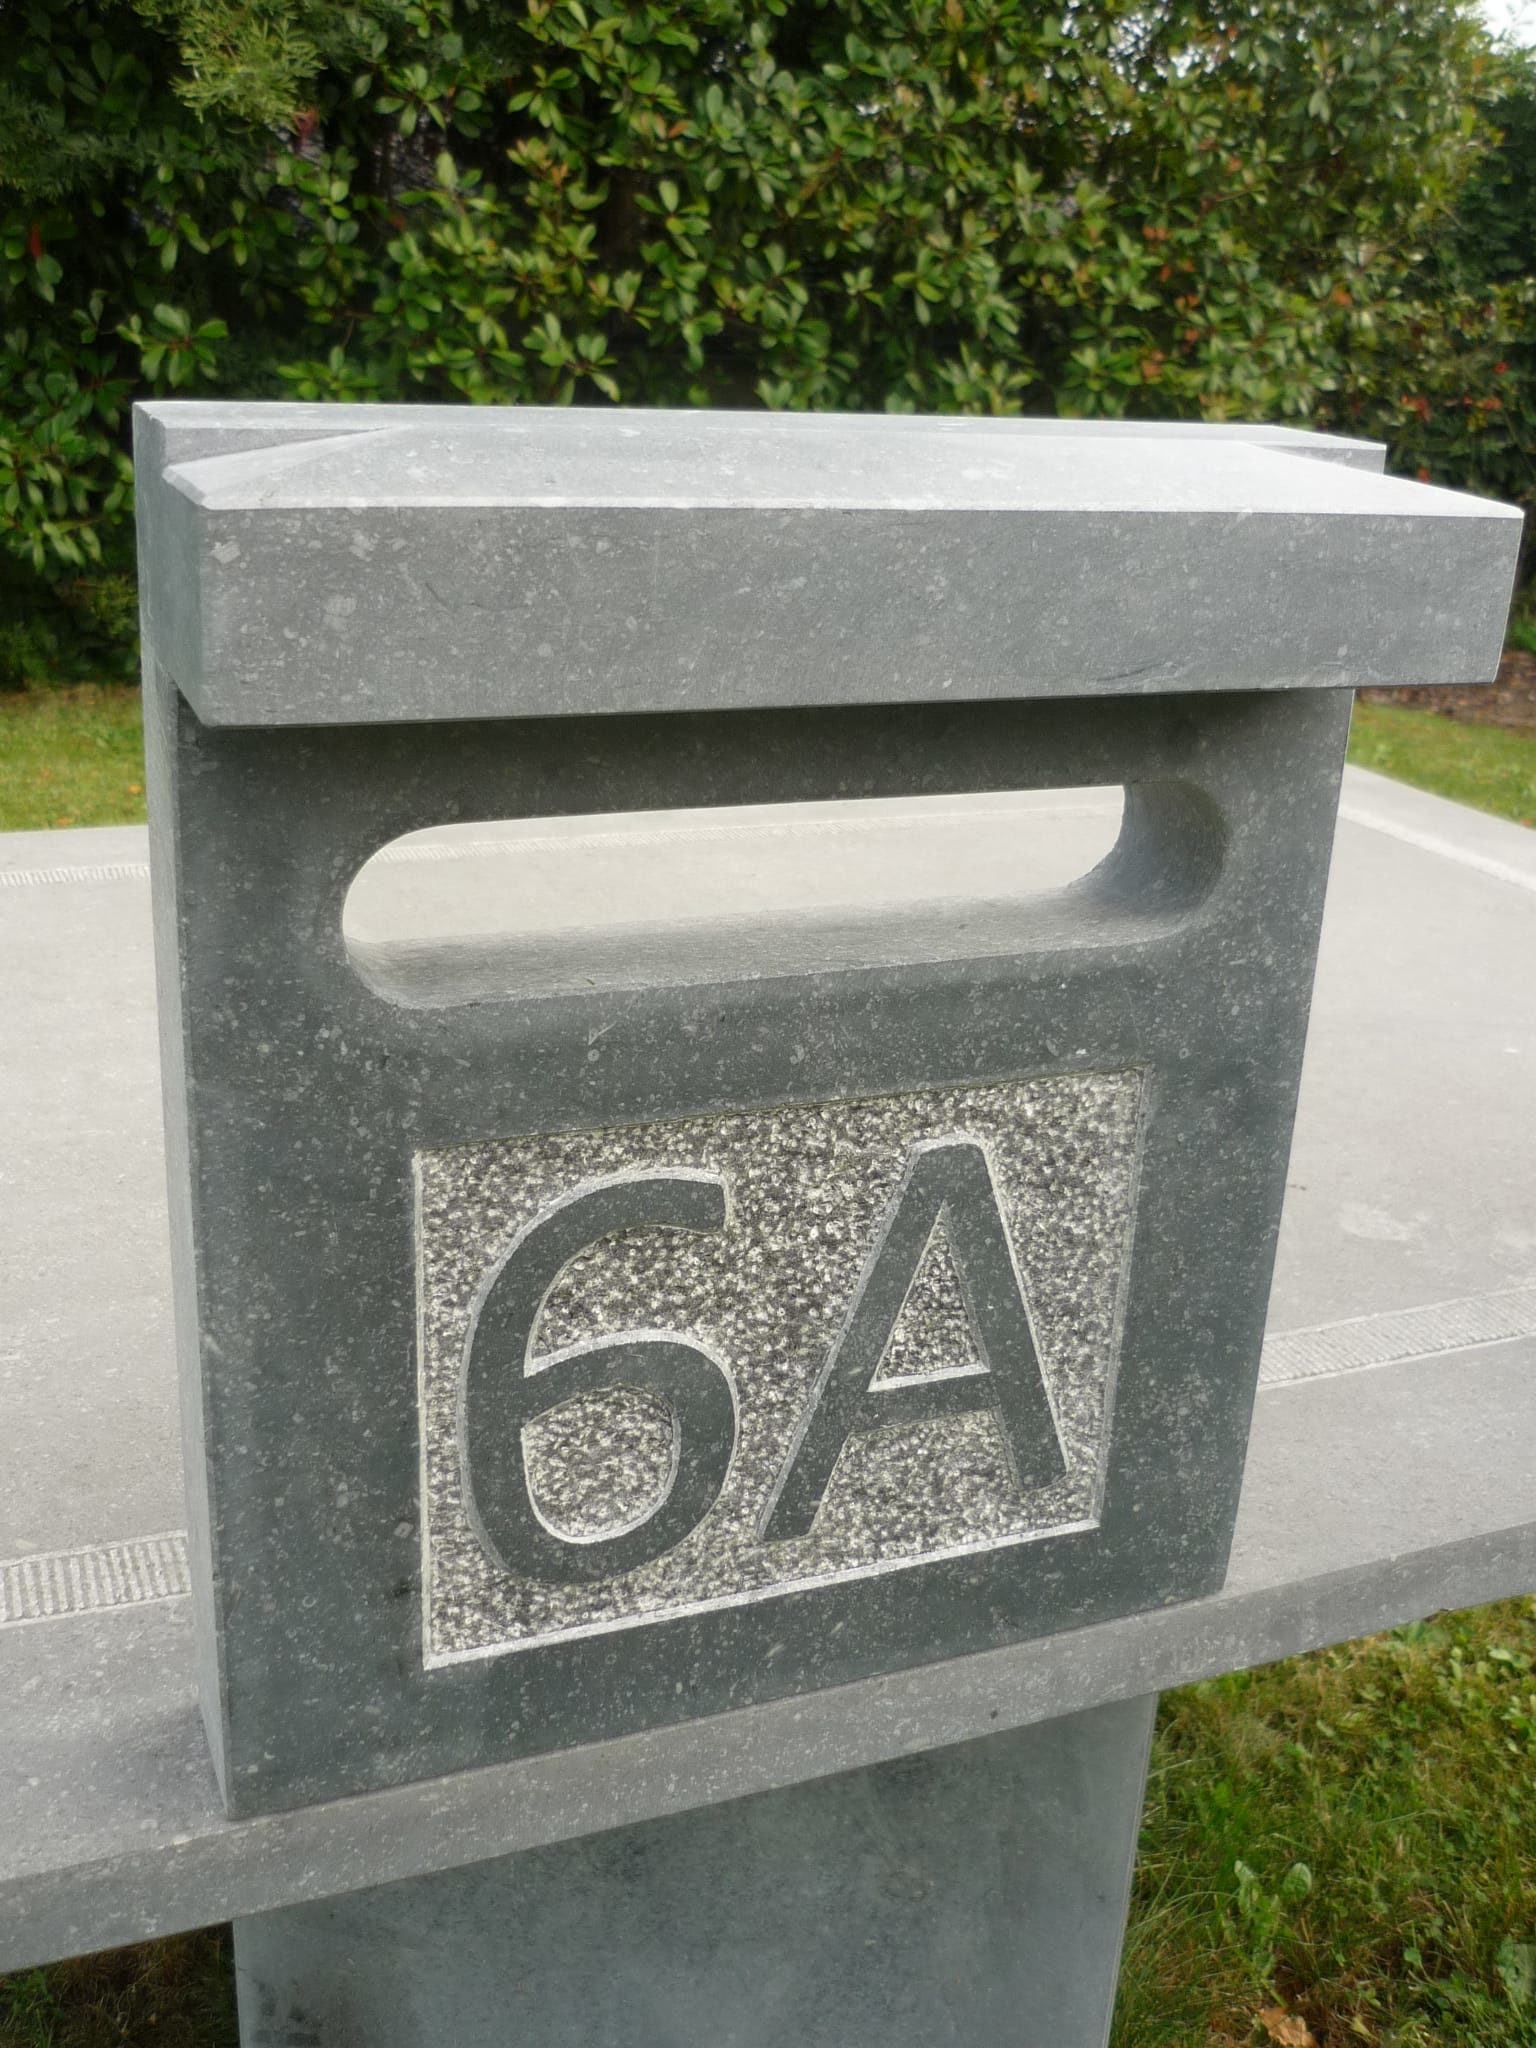 Built-in letterbox in Belgian blue stone